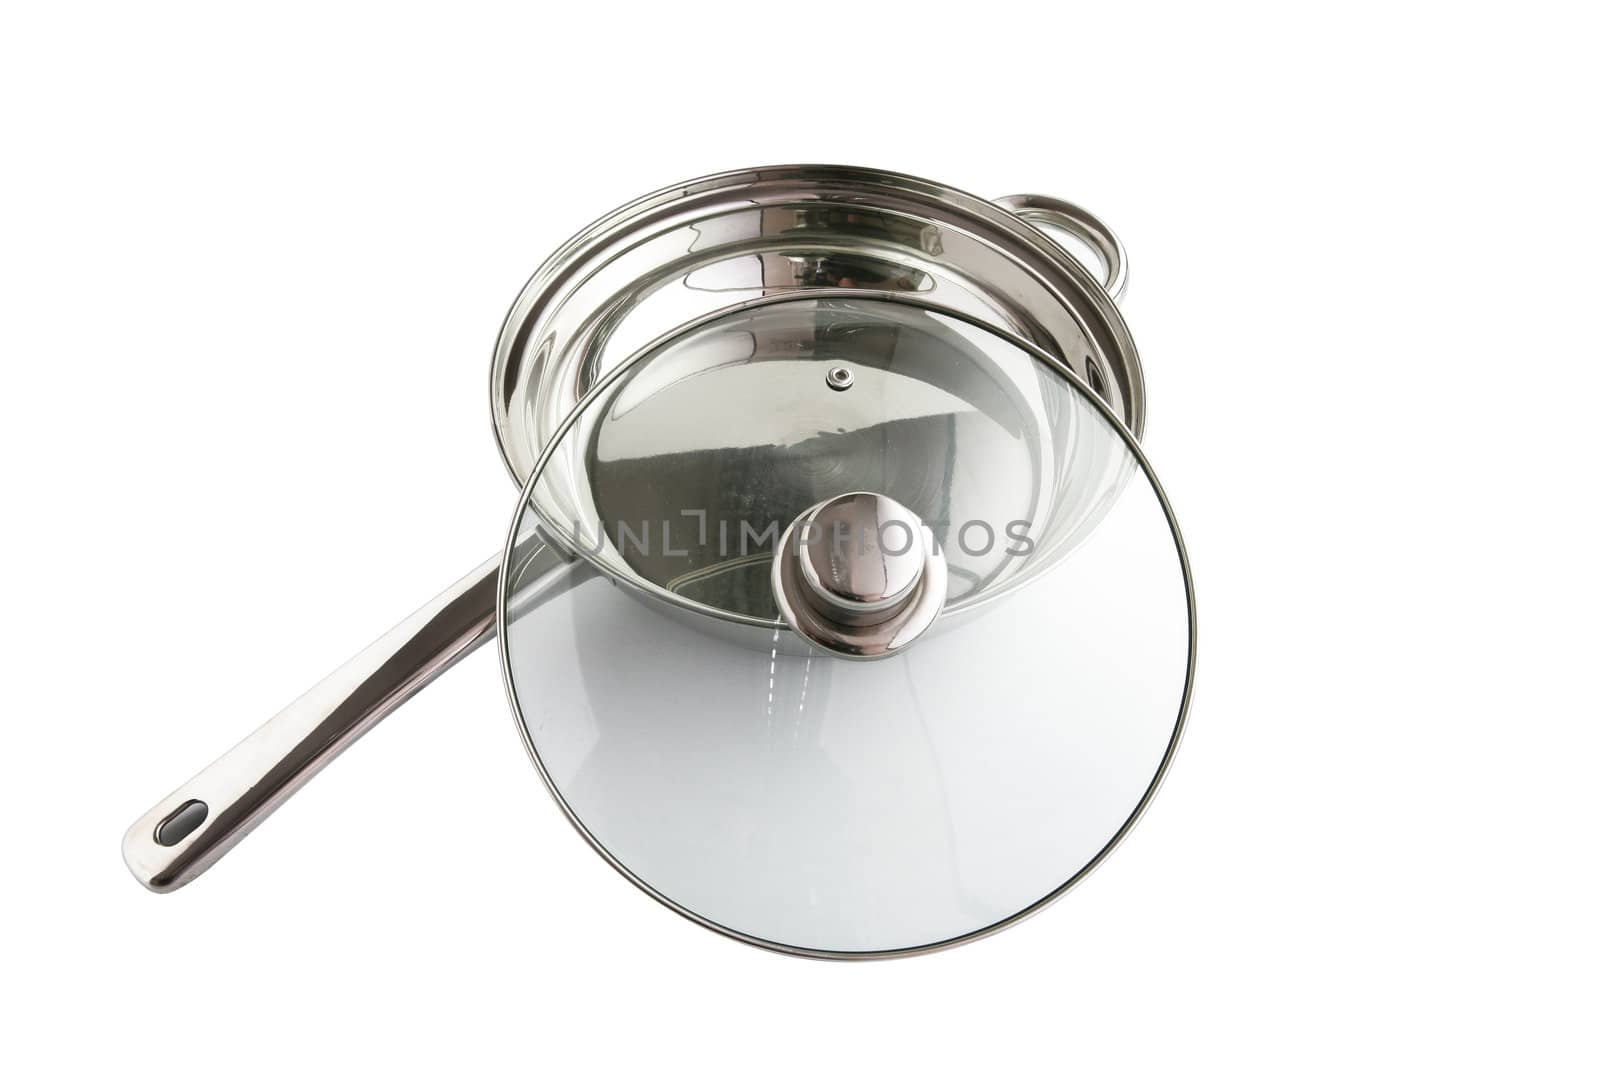 Saucepan with a glass lid